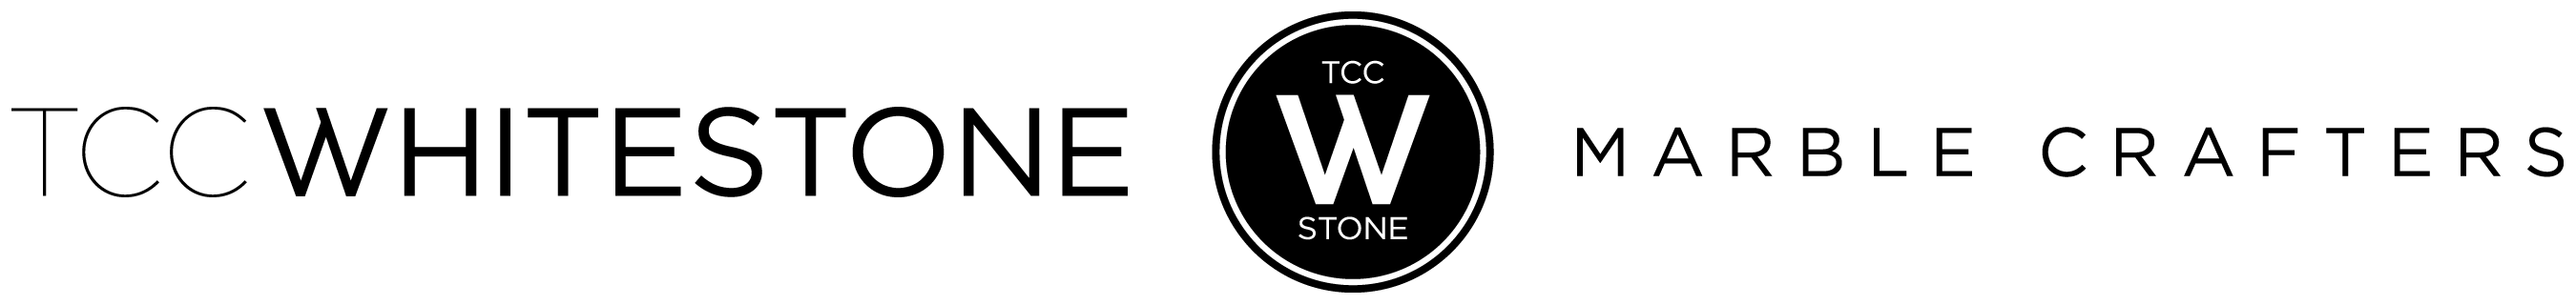 Whitestone Logo - Craftsman Marble, Furniture and Decoration